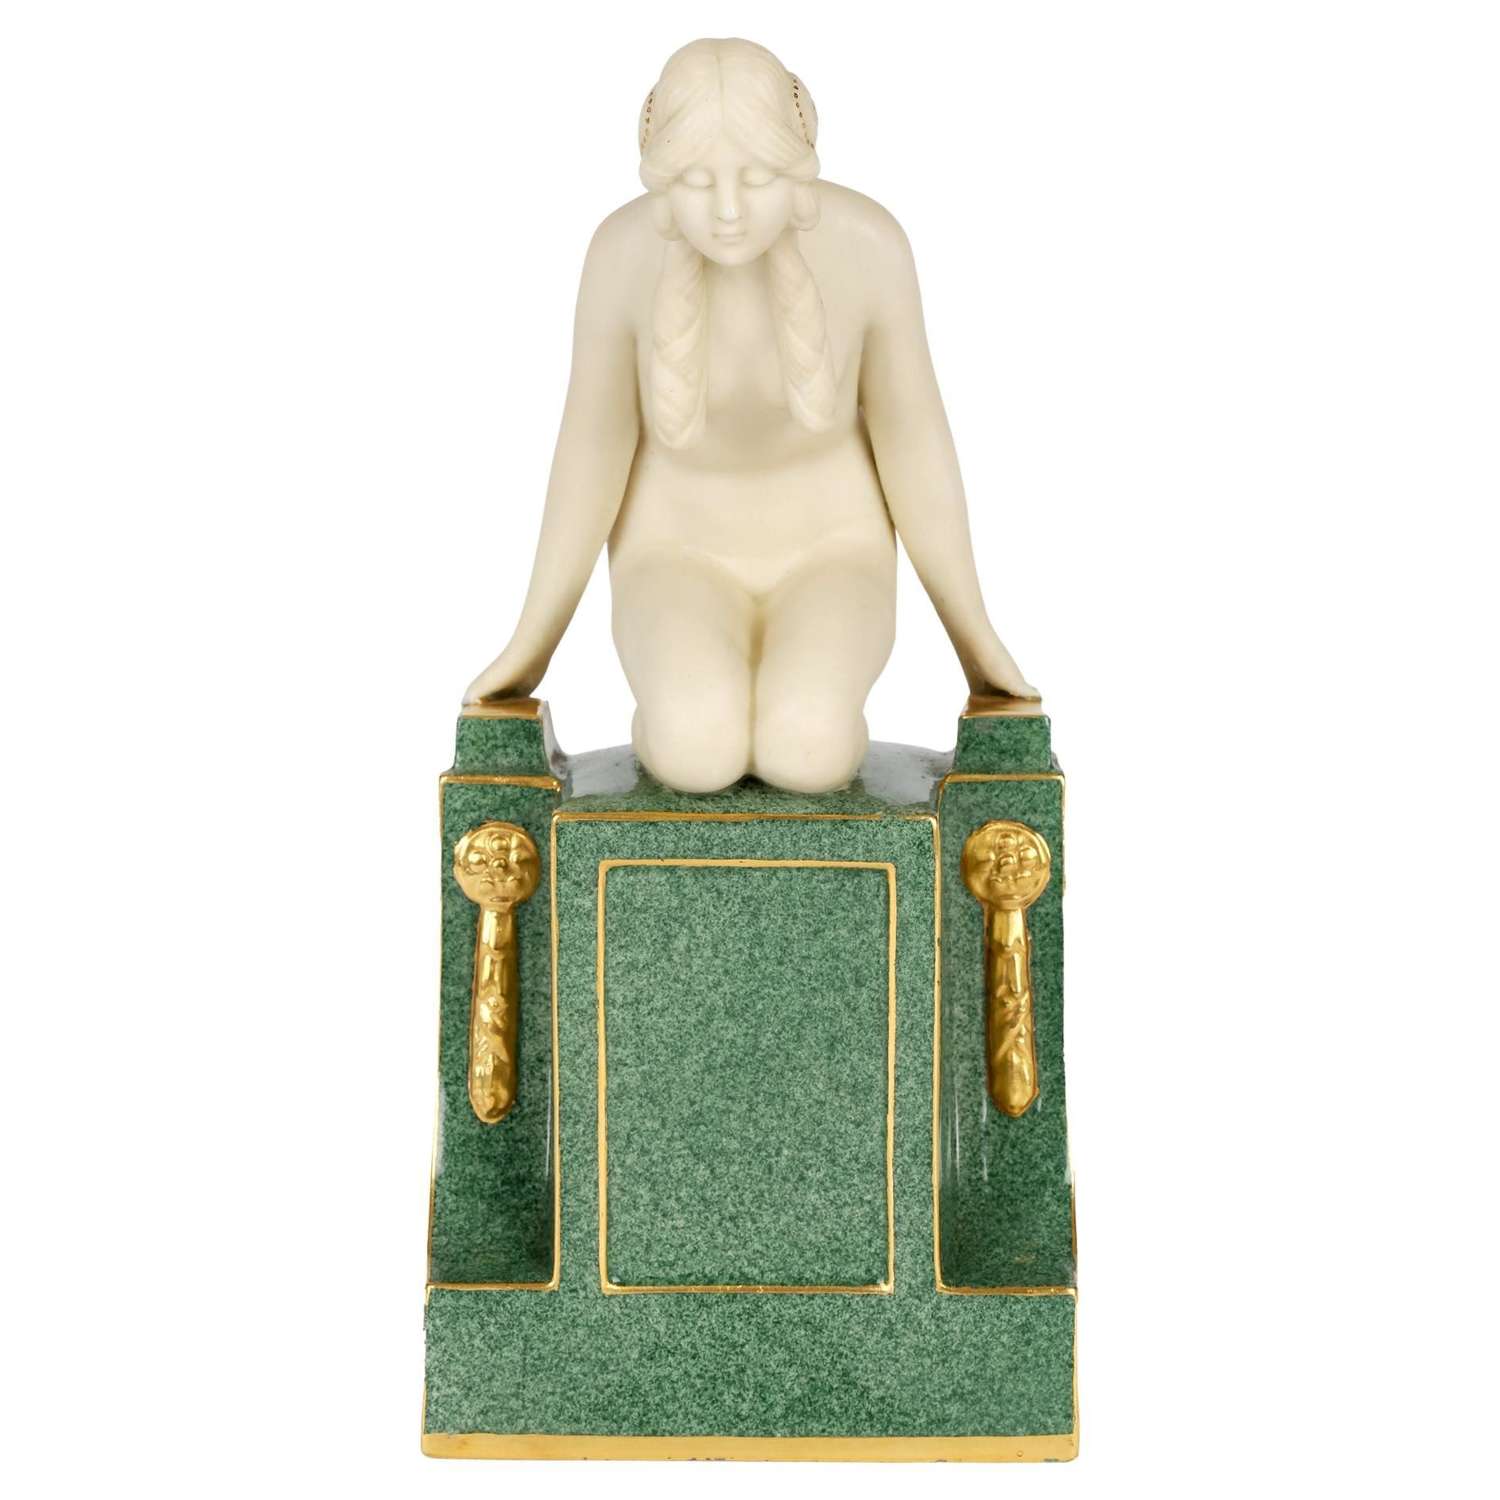 Frederick Gertner Royal Worcester Art Deco Sculptural Naiad Figurine